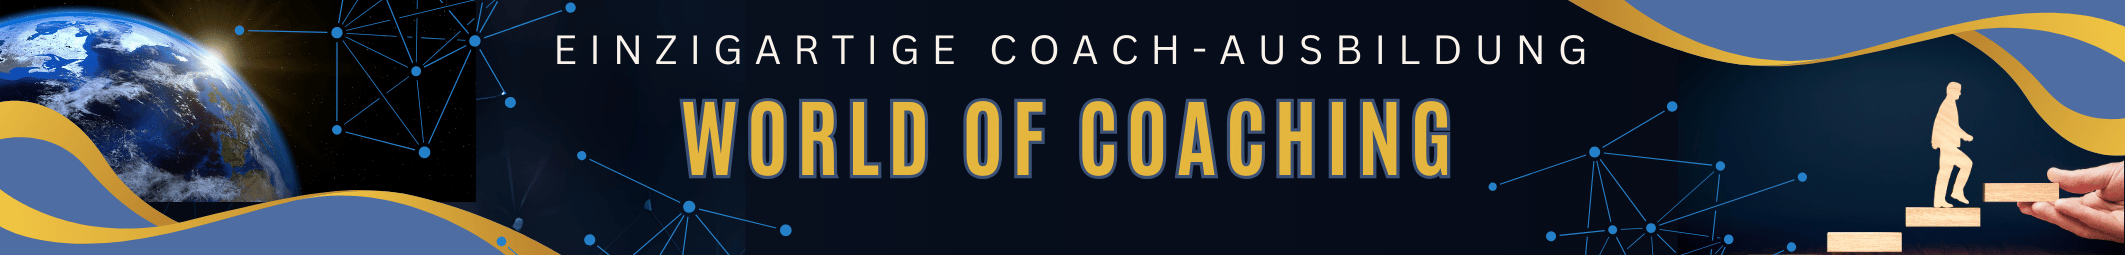 World of Coaching Banner